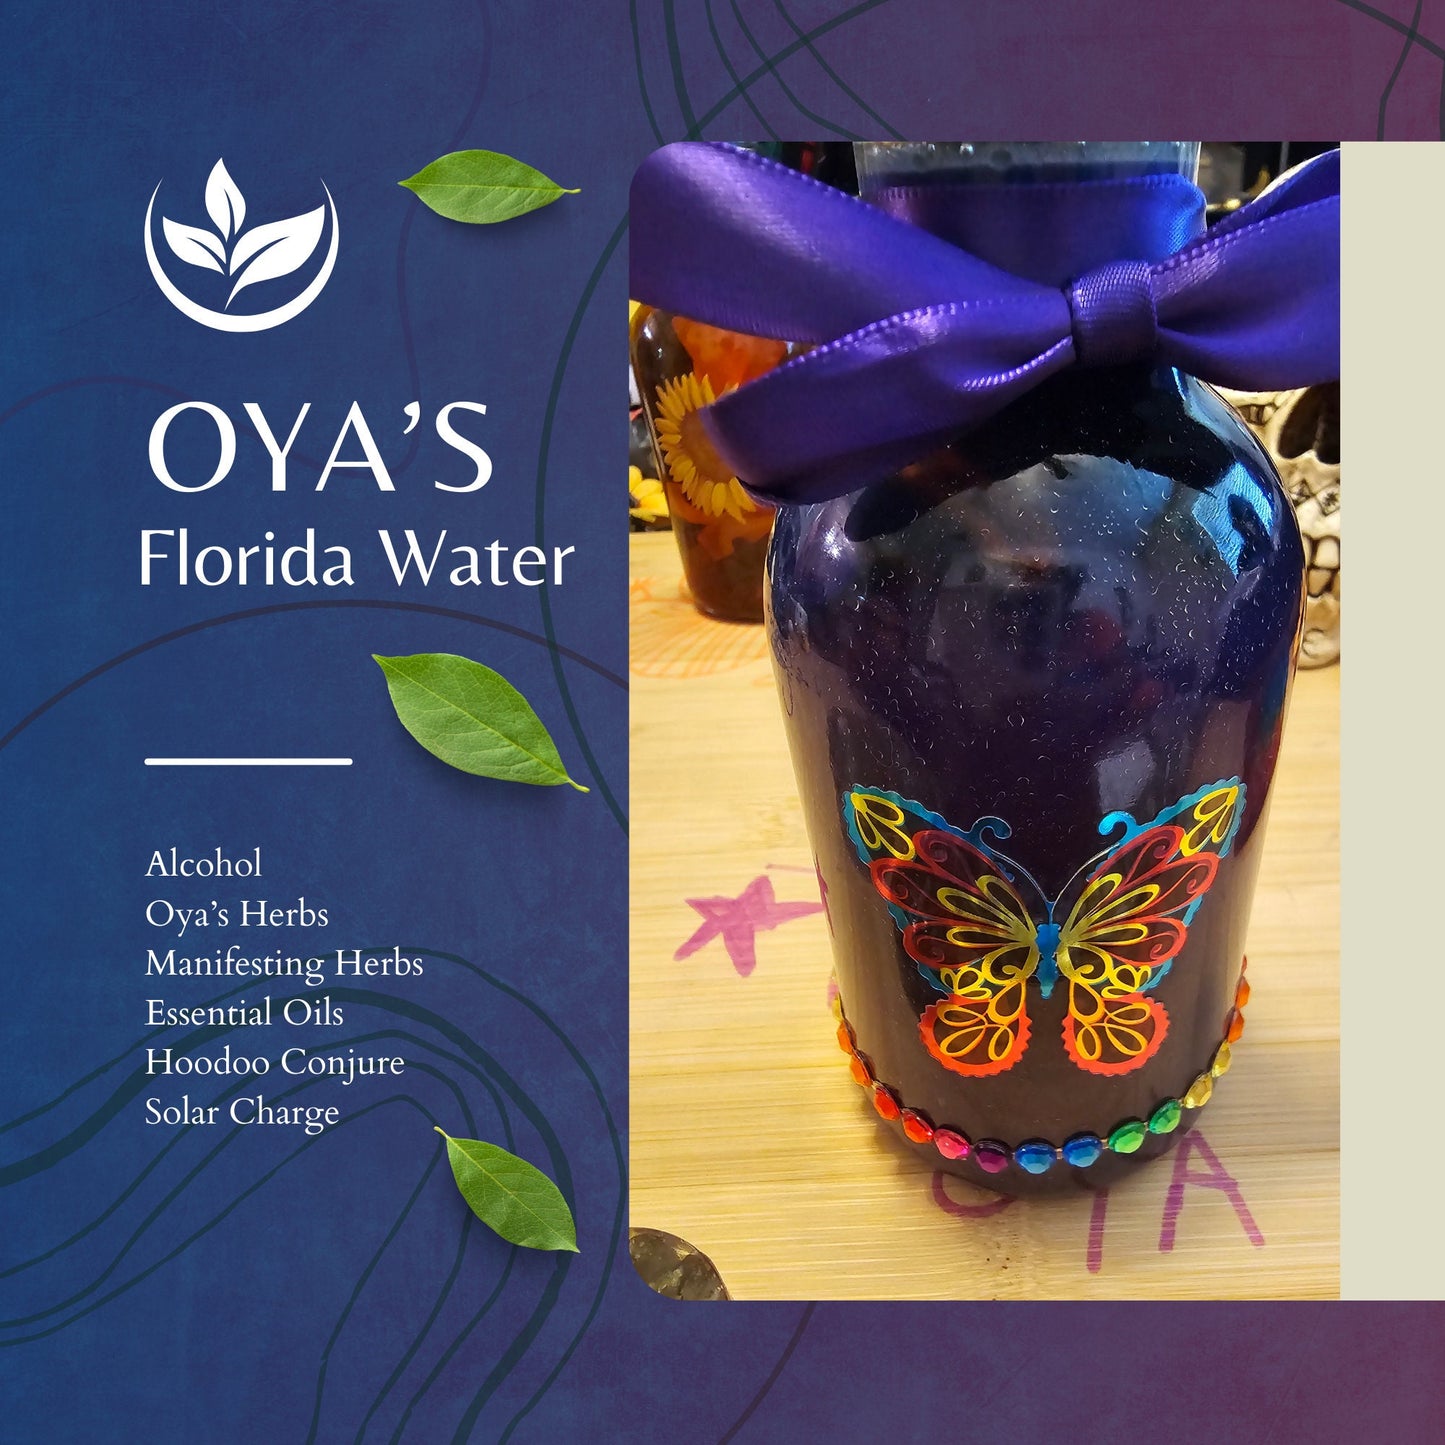 Oya's Florida Water